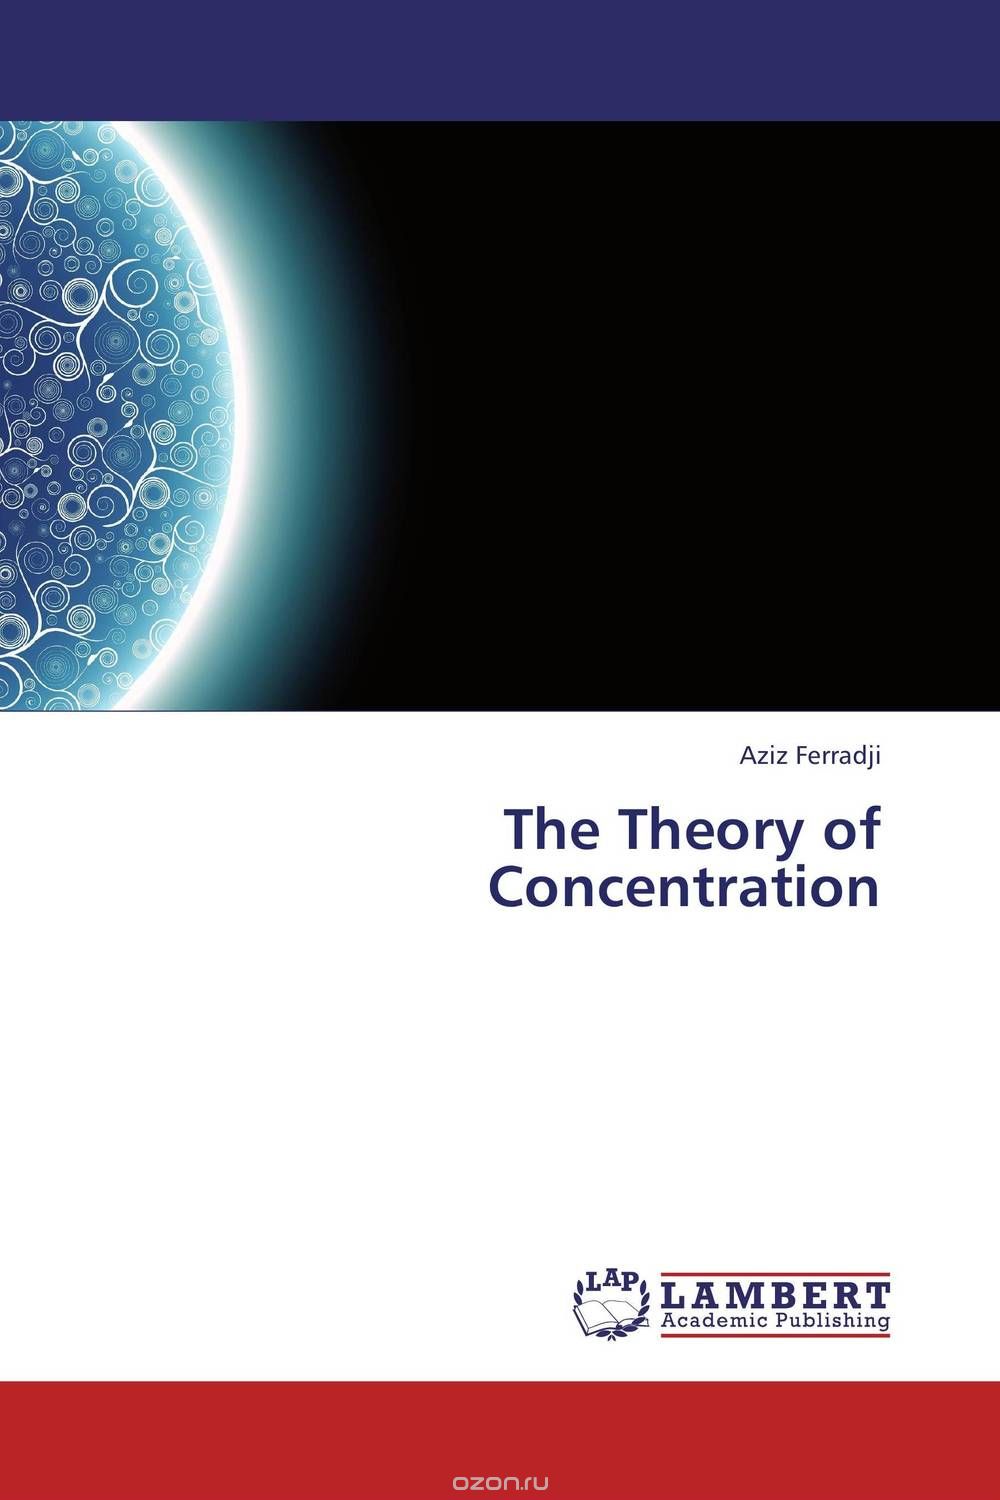 Скачать книгу "The Theory of Concentration"